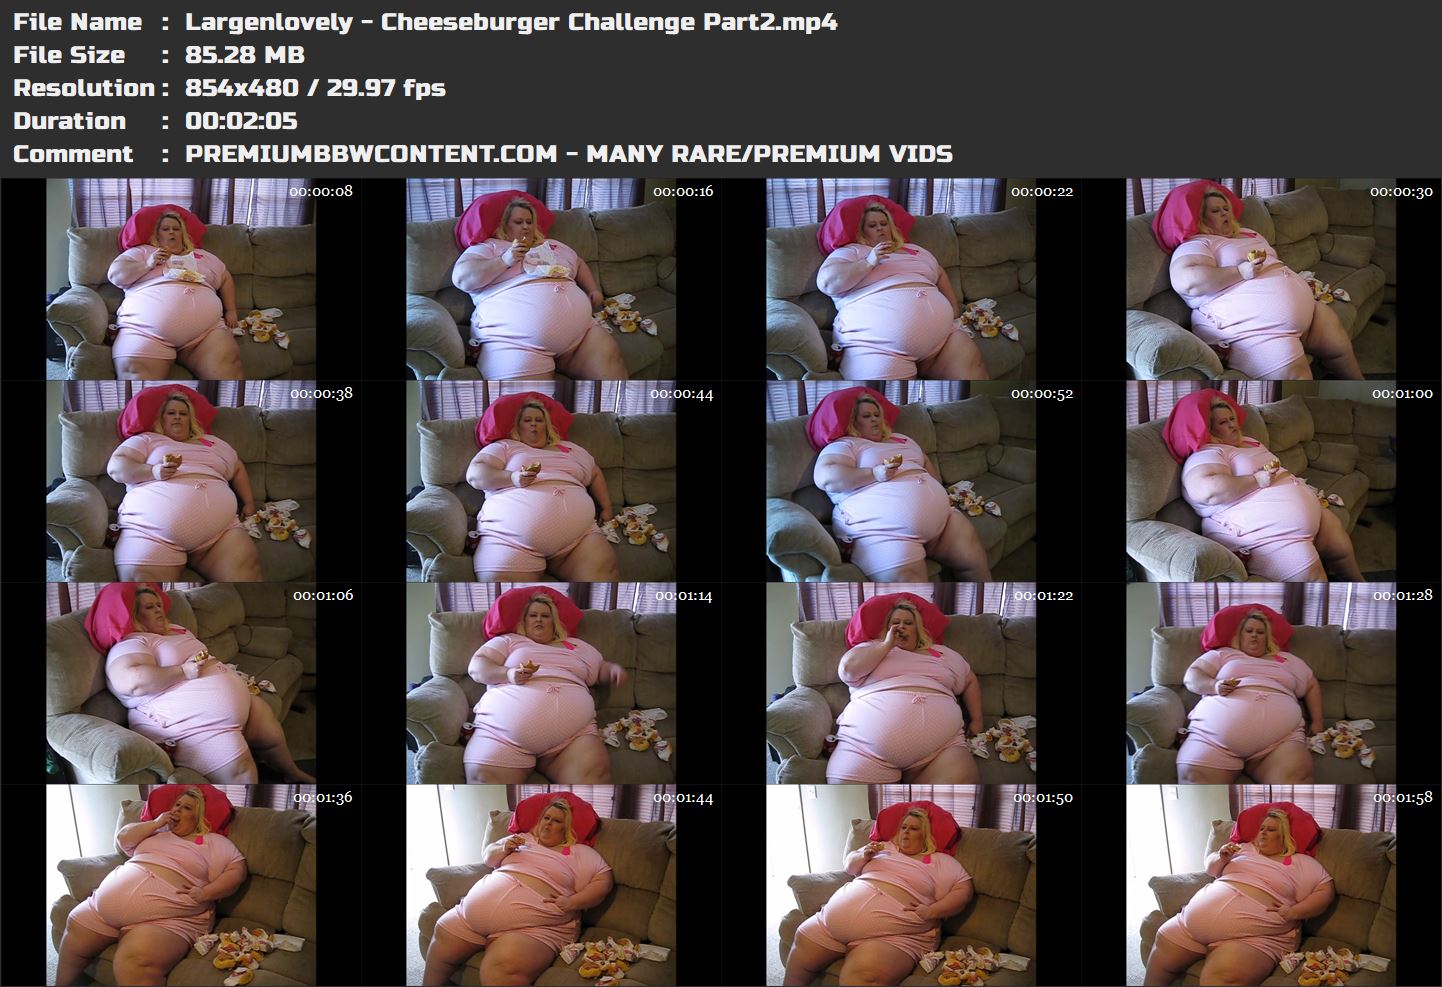 Largenlovely - Cheeseburger Challenge Part2 thumbnails